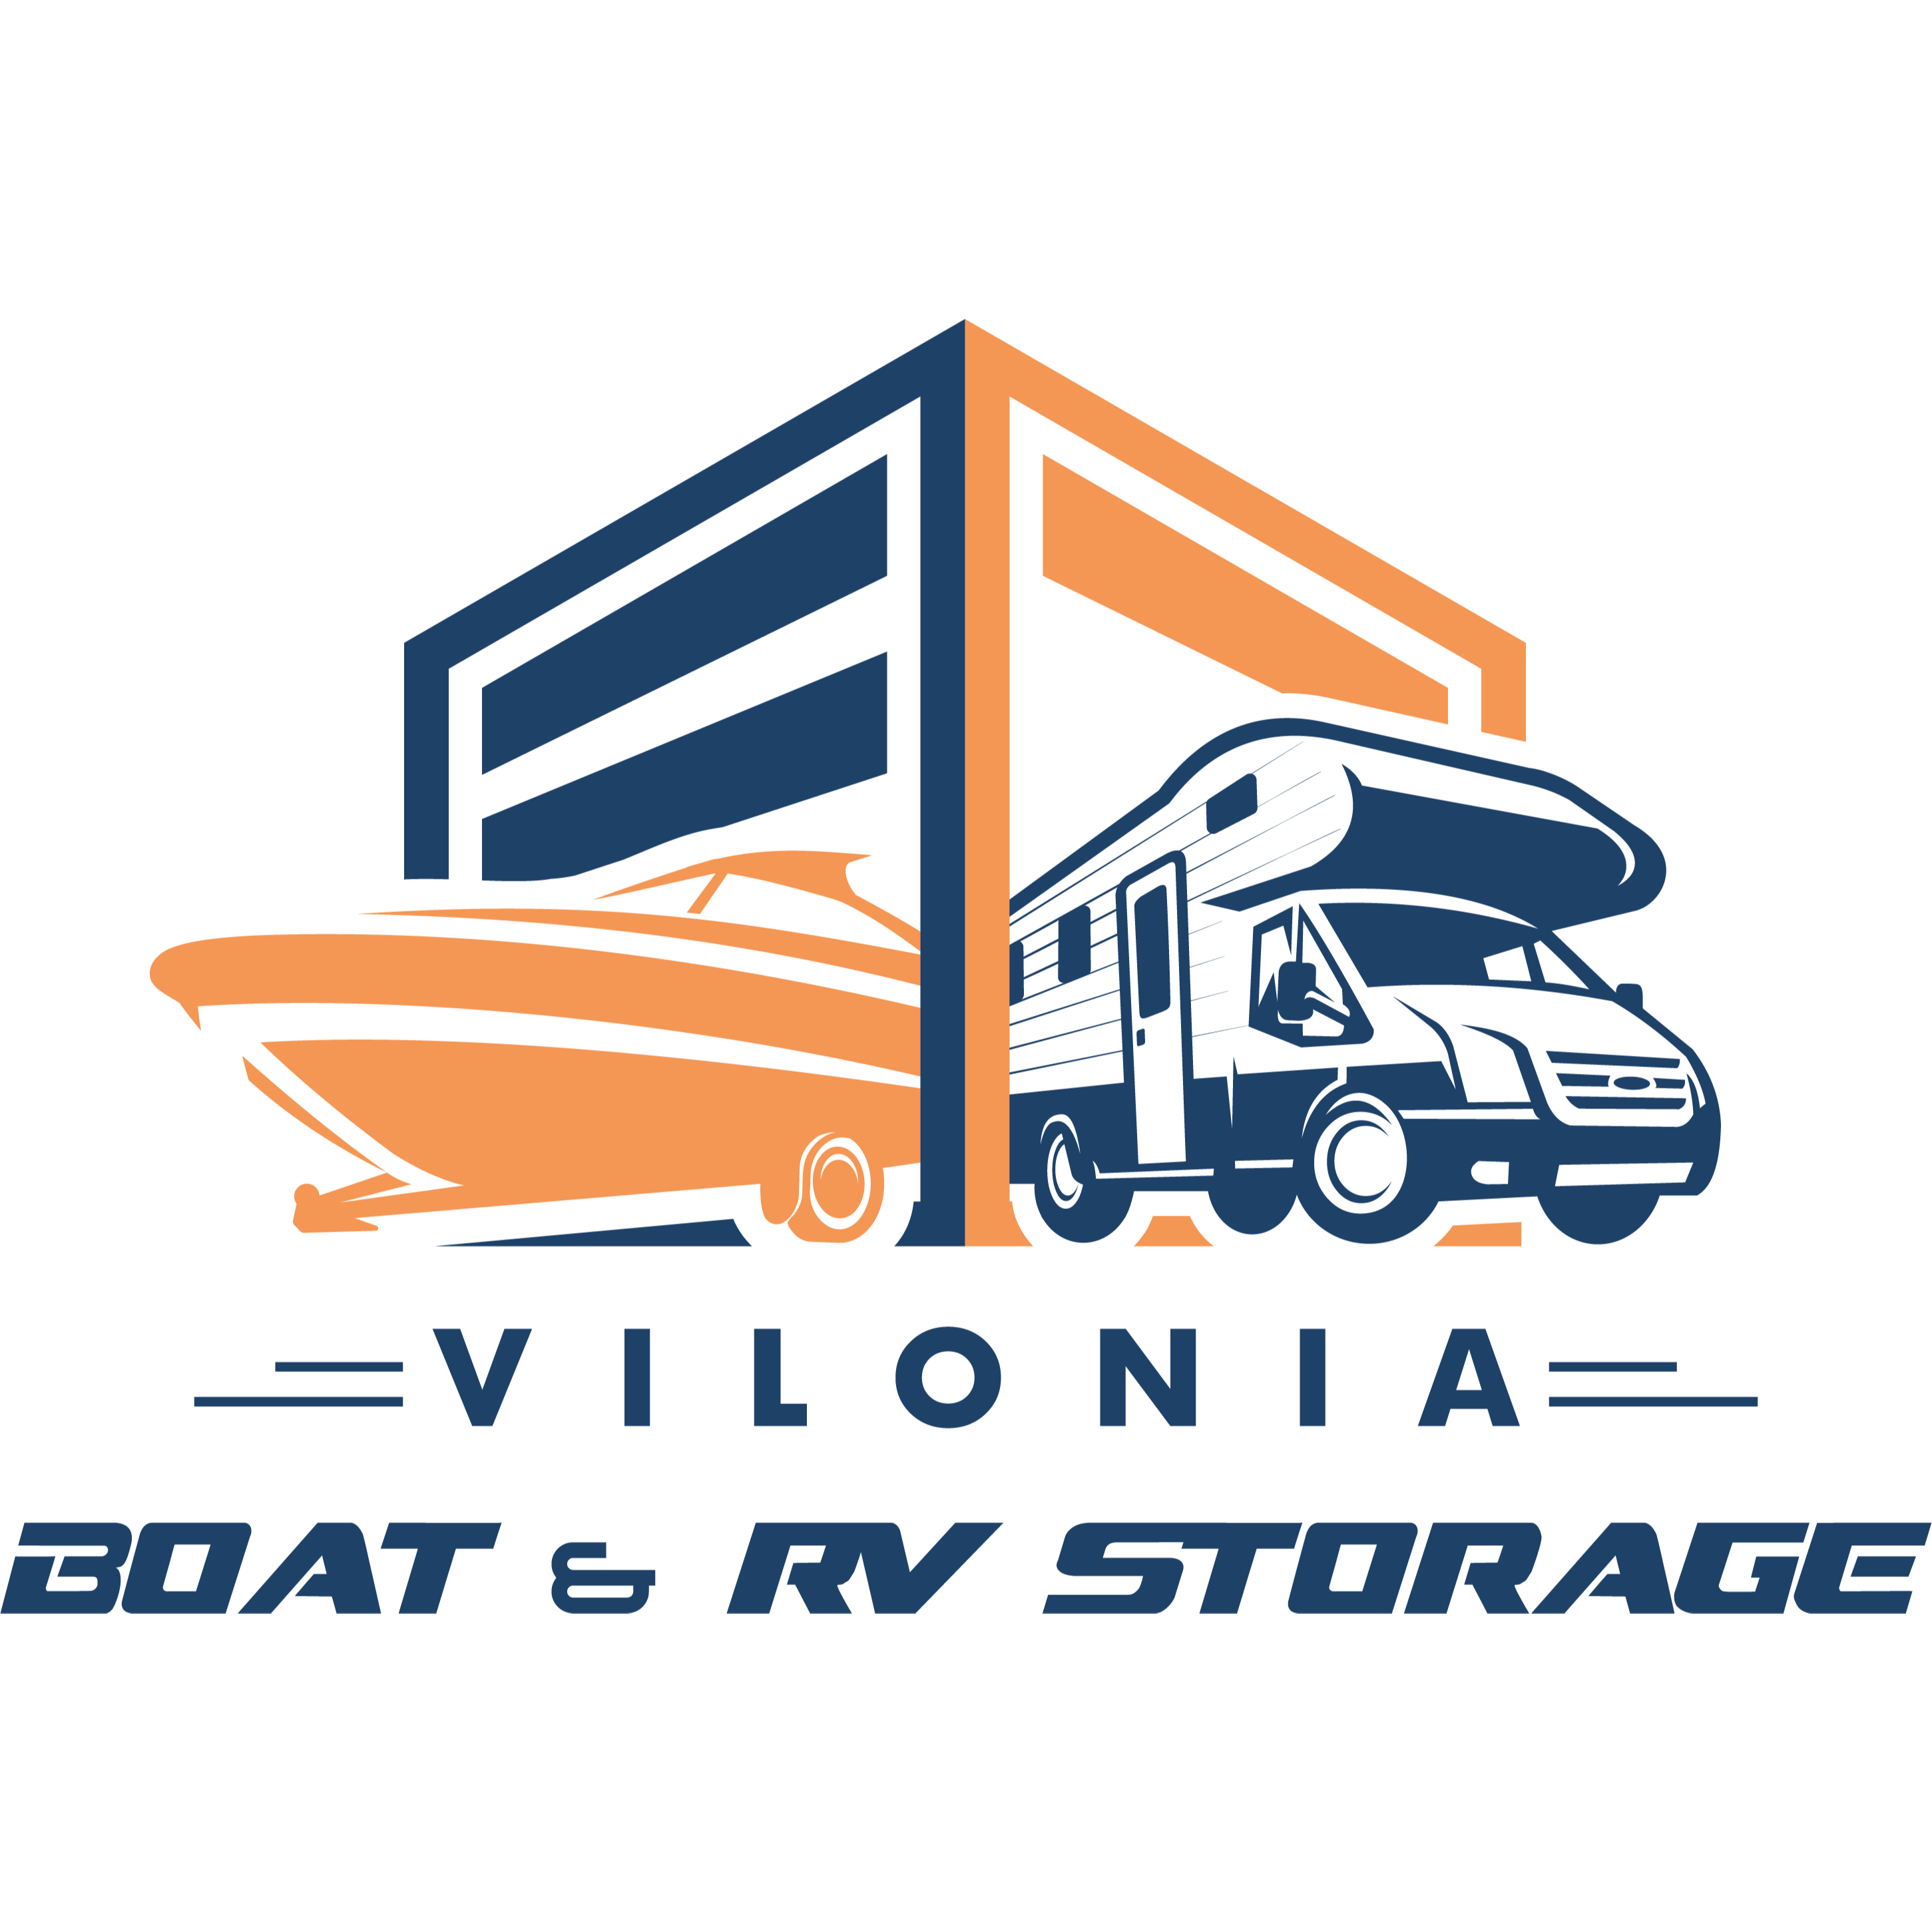 Vilonia Boat and RV Storage - Vilonia, AR 72173 - (501)762-7078 | ShowMeLocal.com